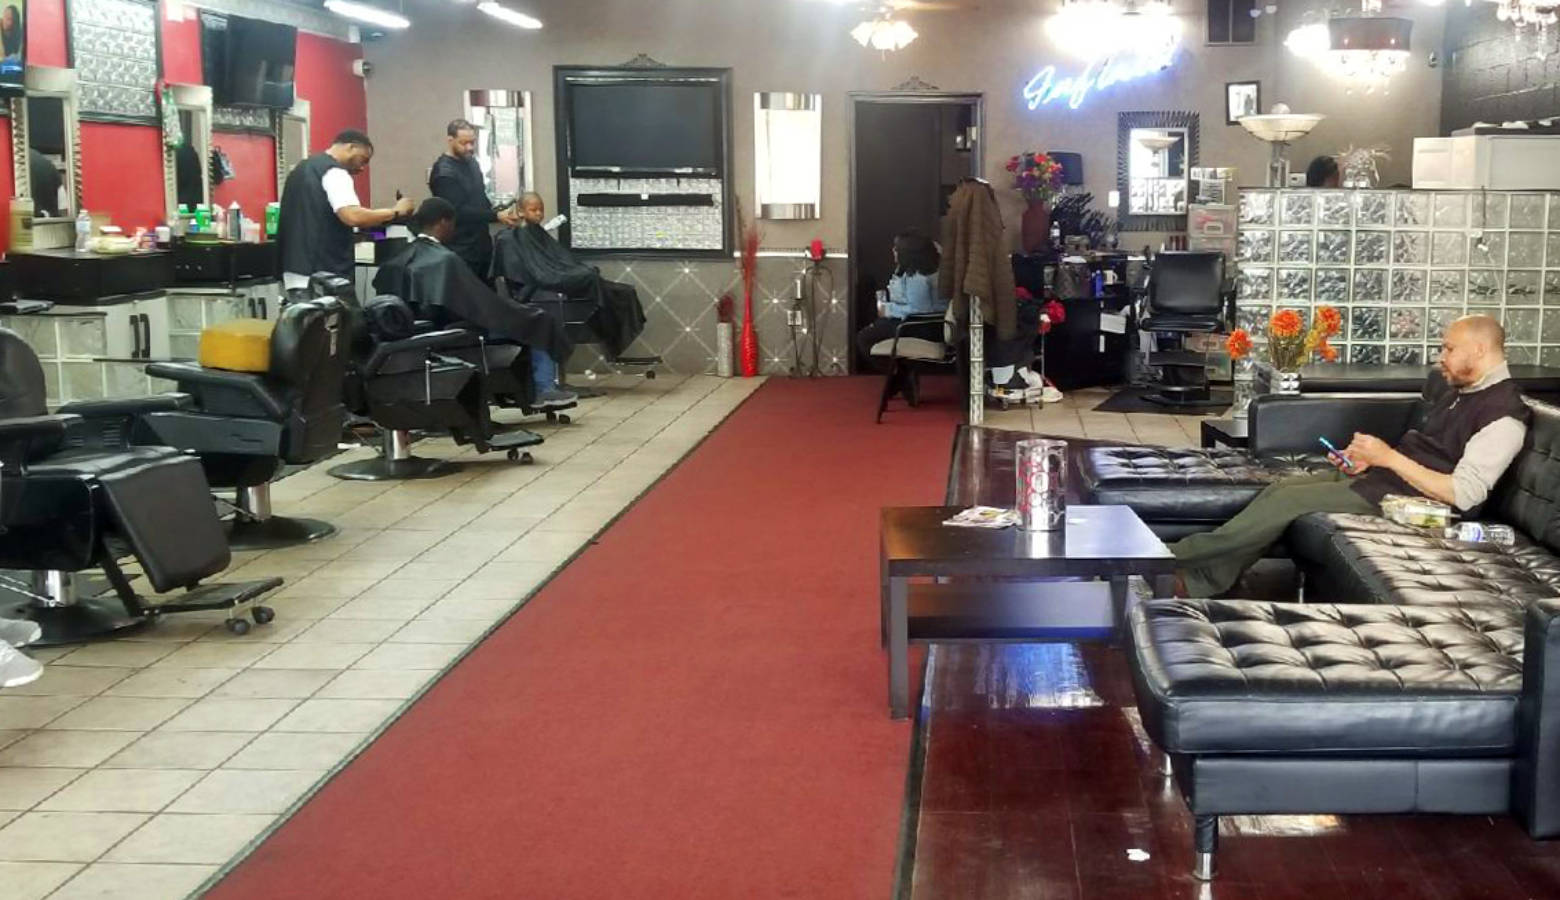 Business finally winds down at Infiniti Men’s Salon after all-day health screenings at the barbershop. (Samantha Horton/IPB News)